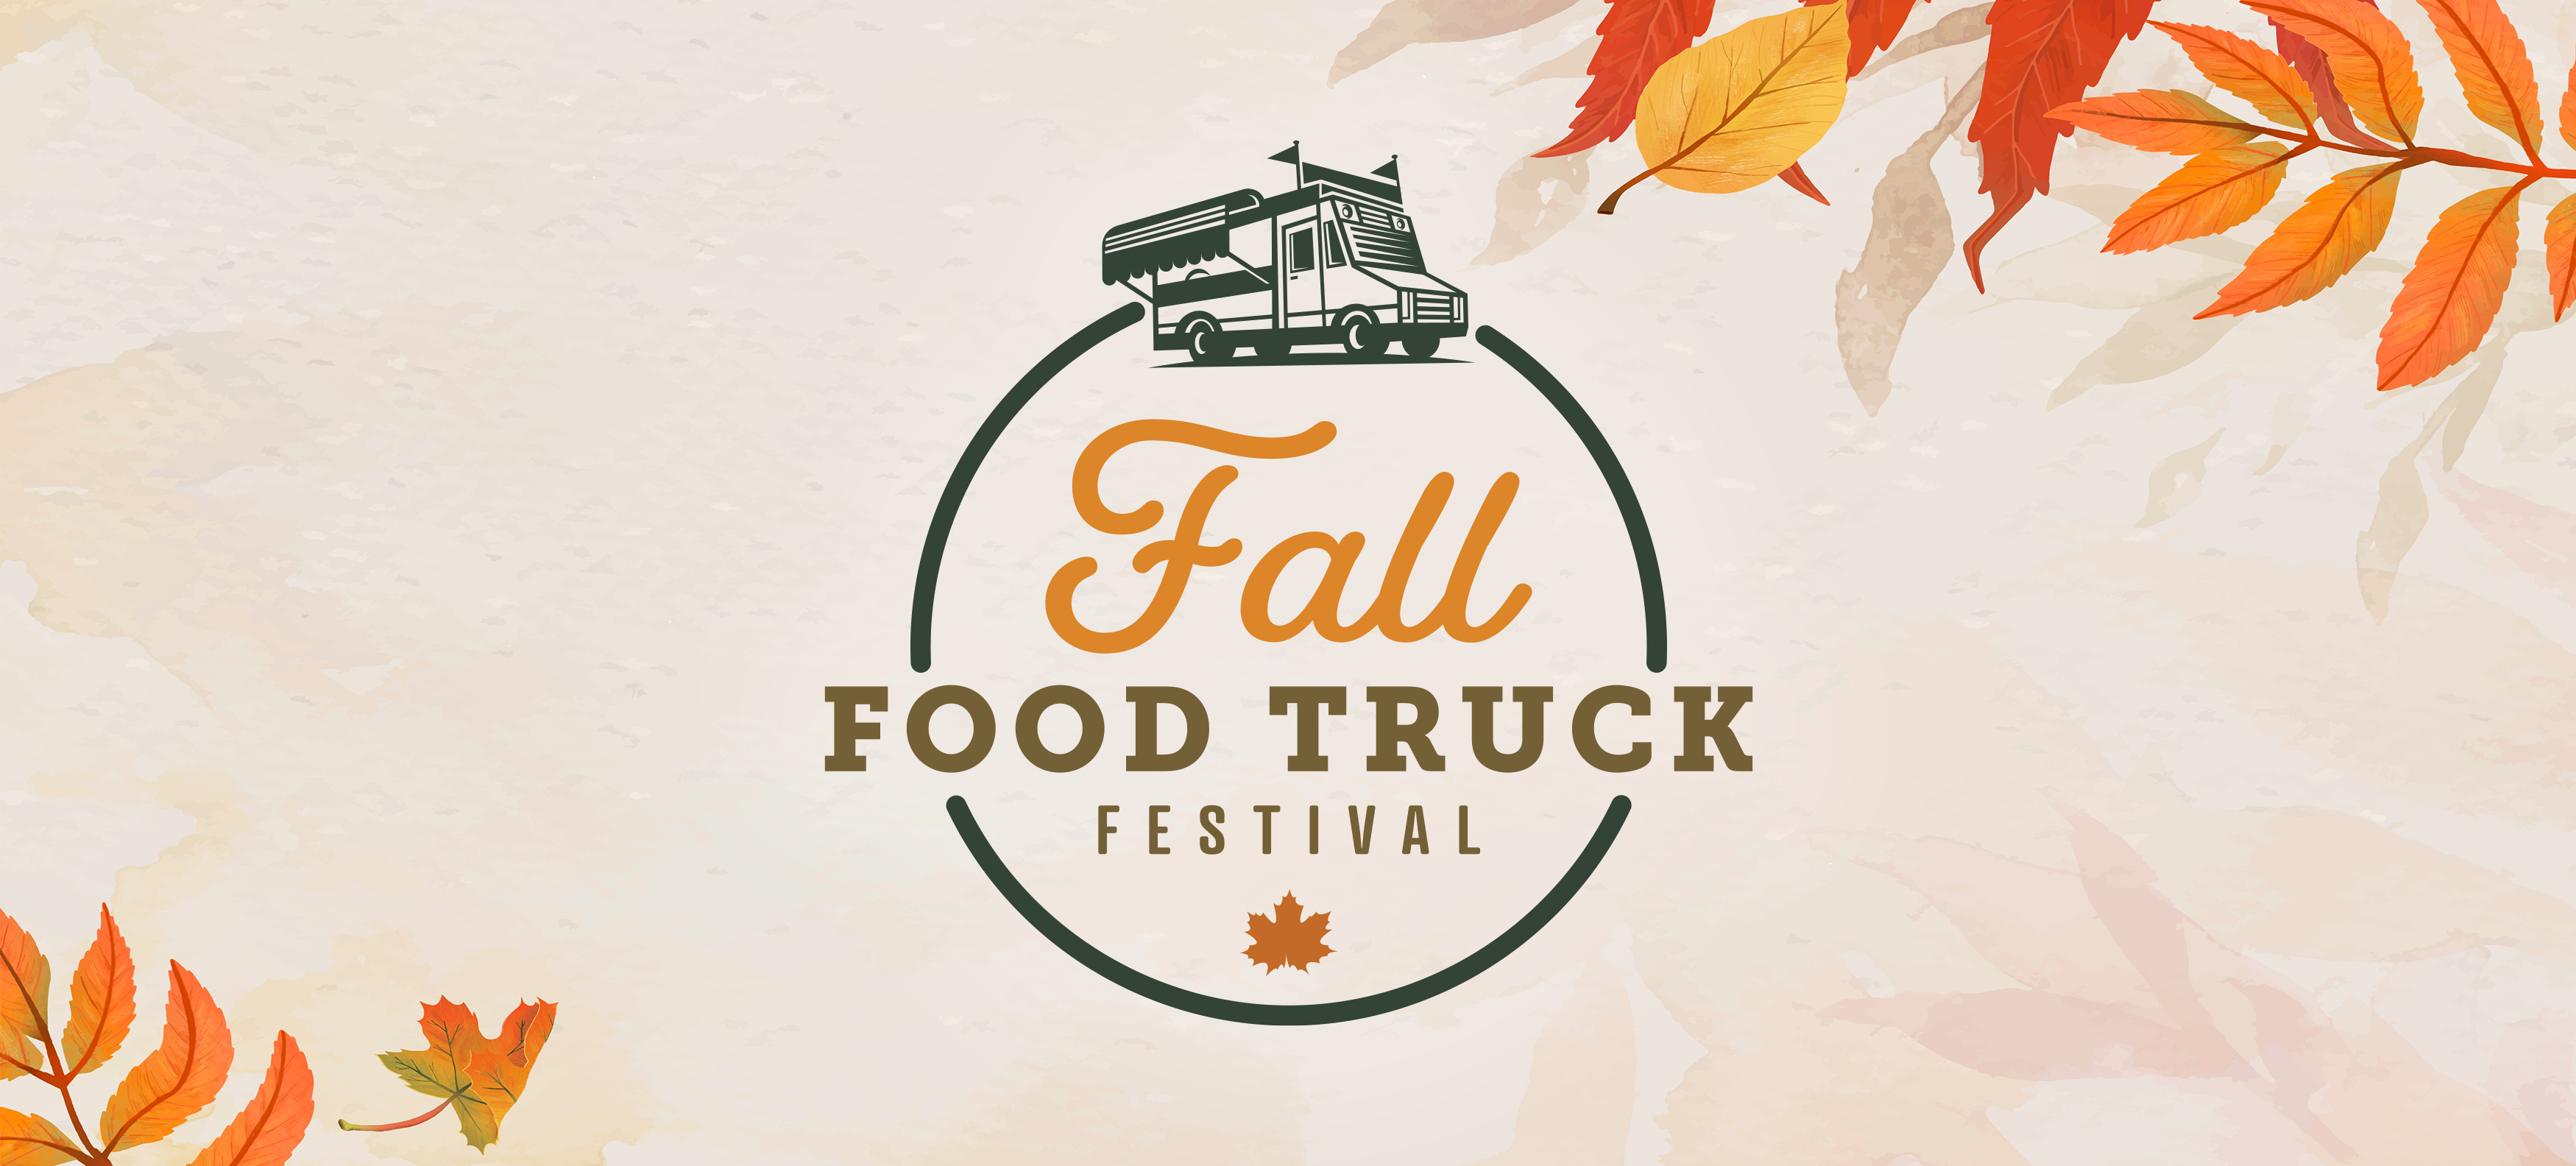 Fall Food Truck Festival header photo